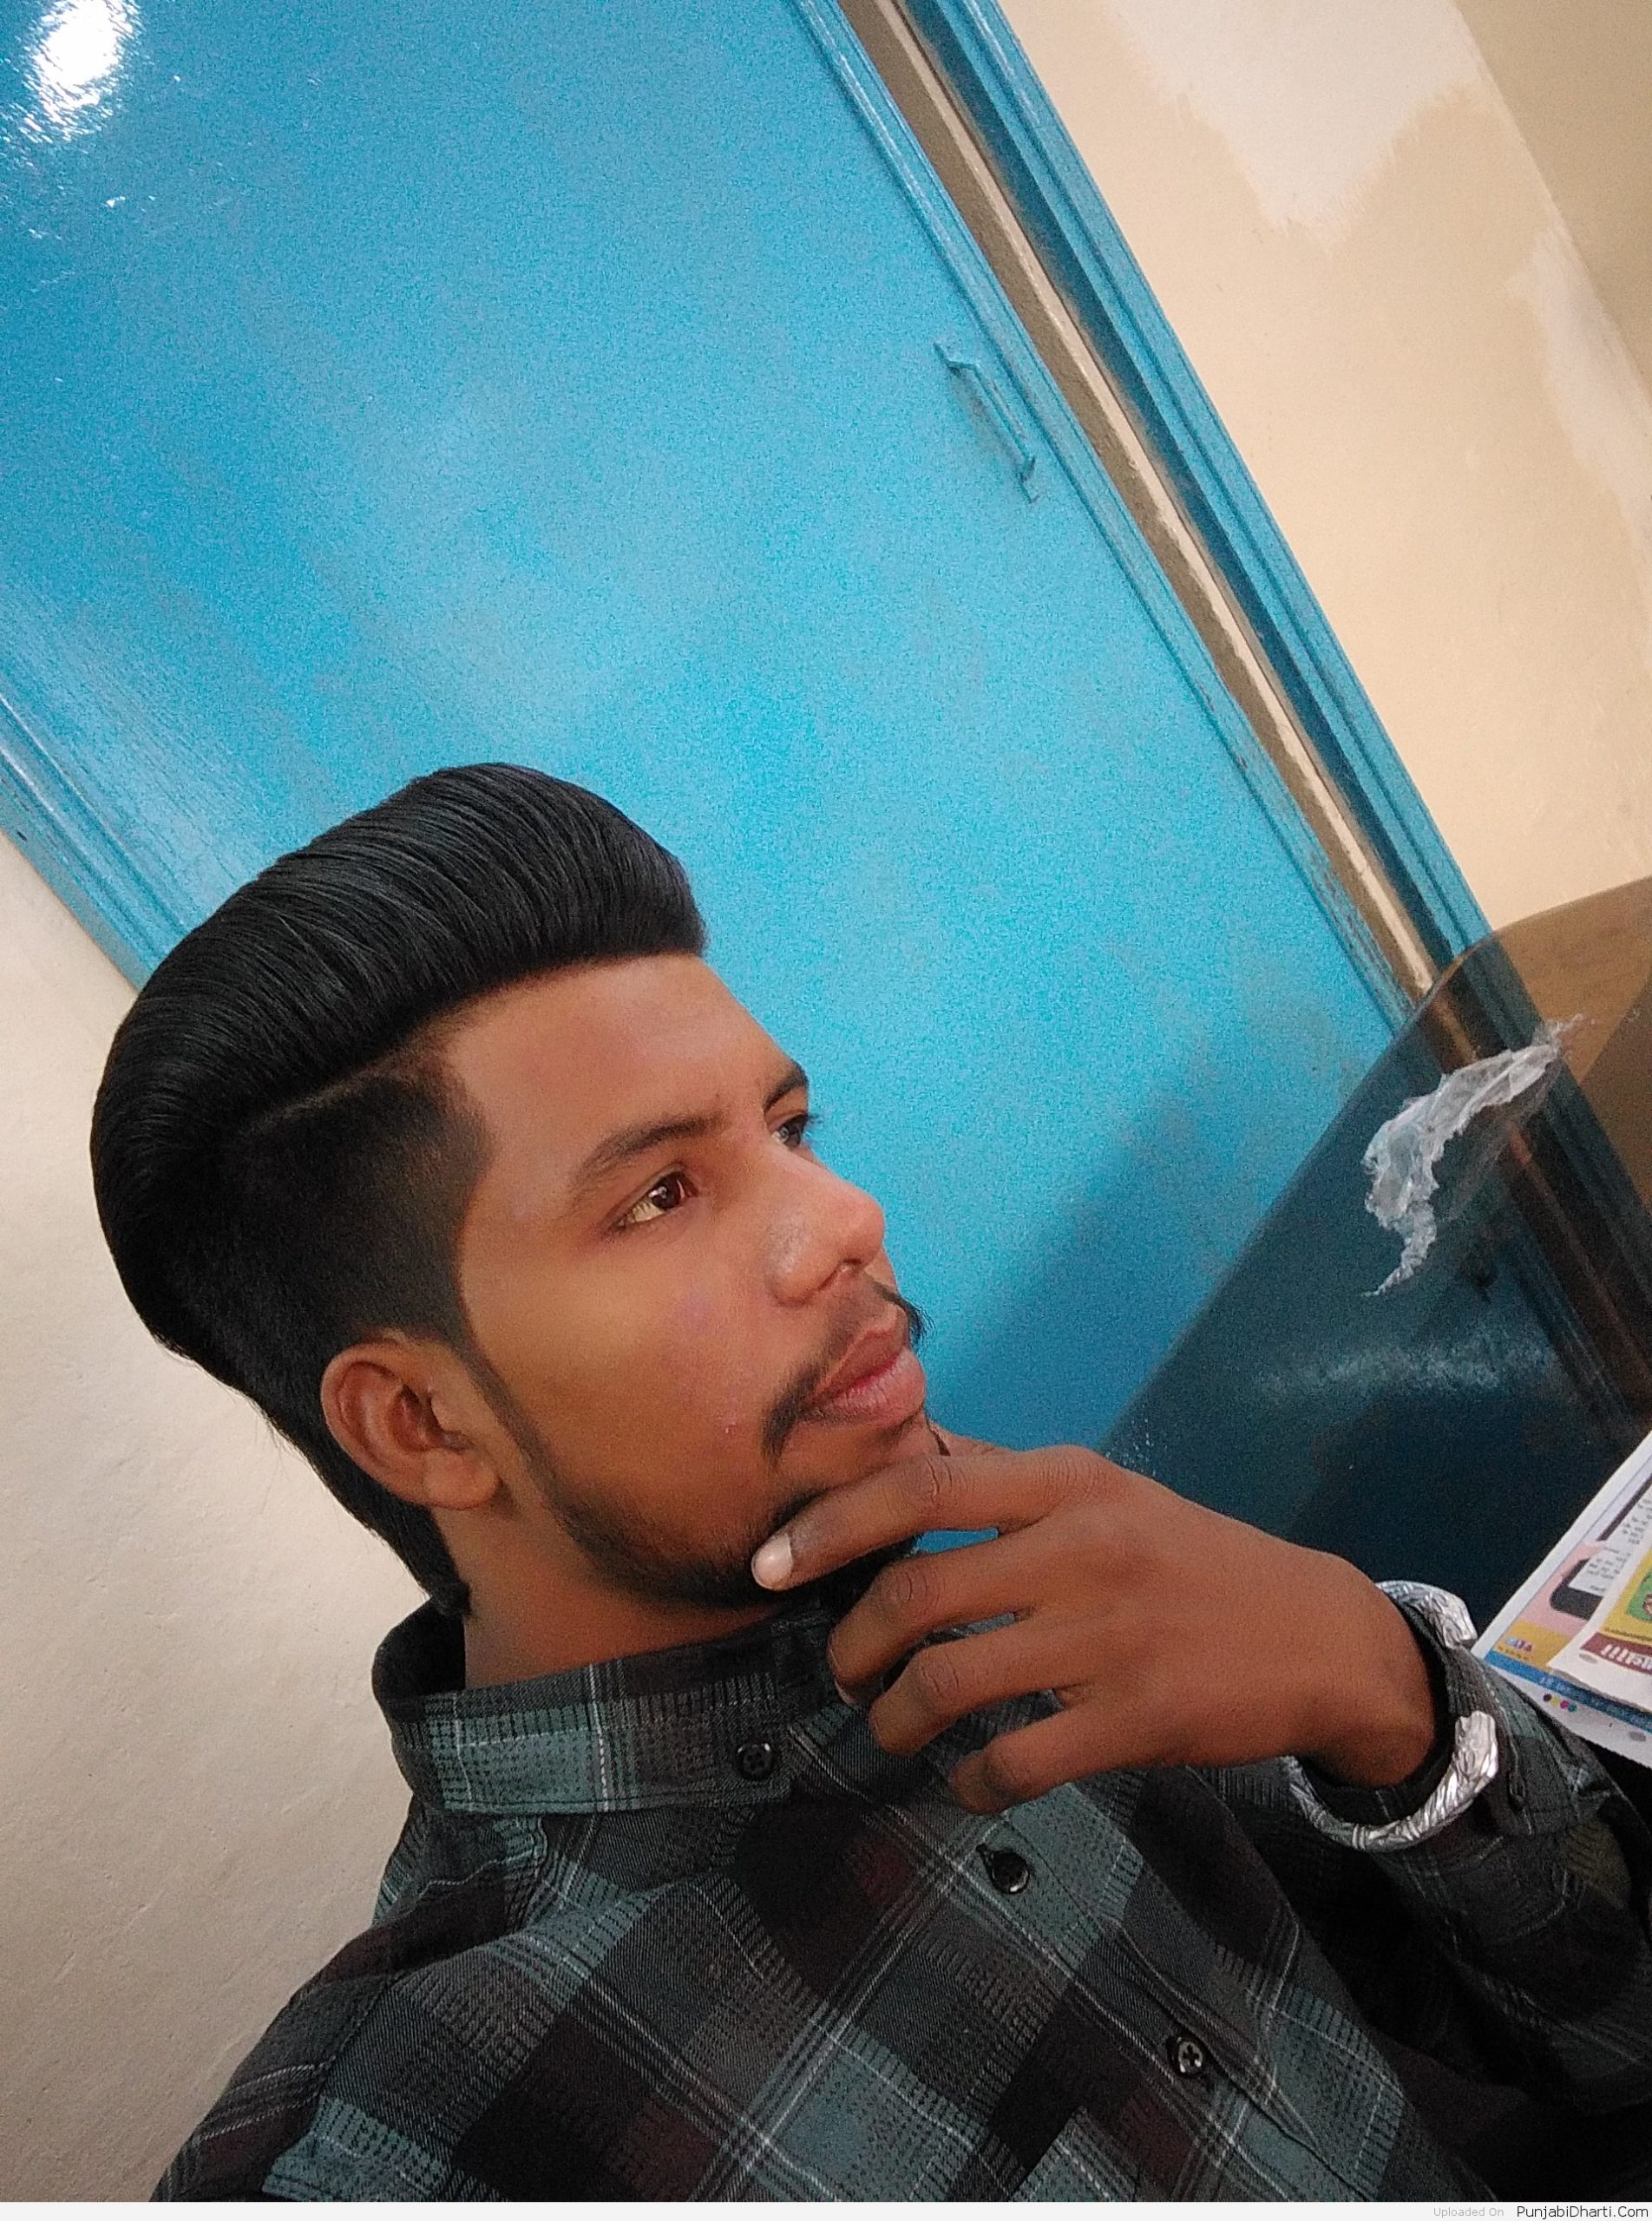 Anupriya | Boy hairstyles, Boys haircut styles, Hair and beard styles